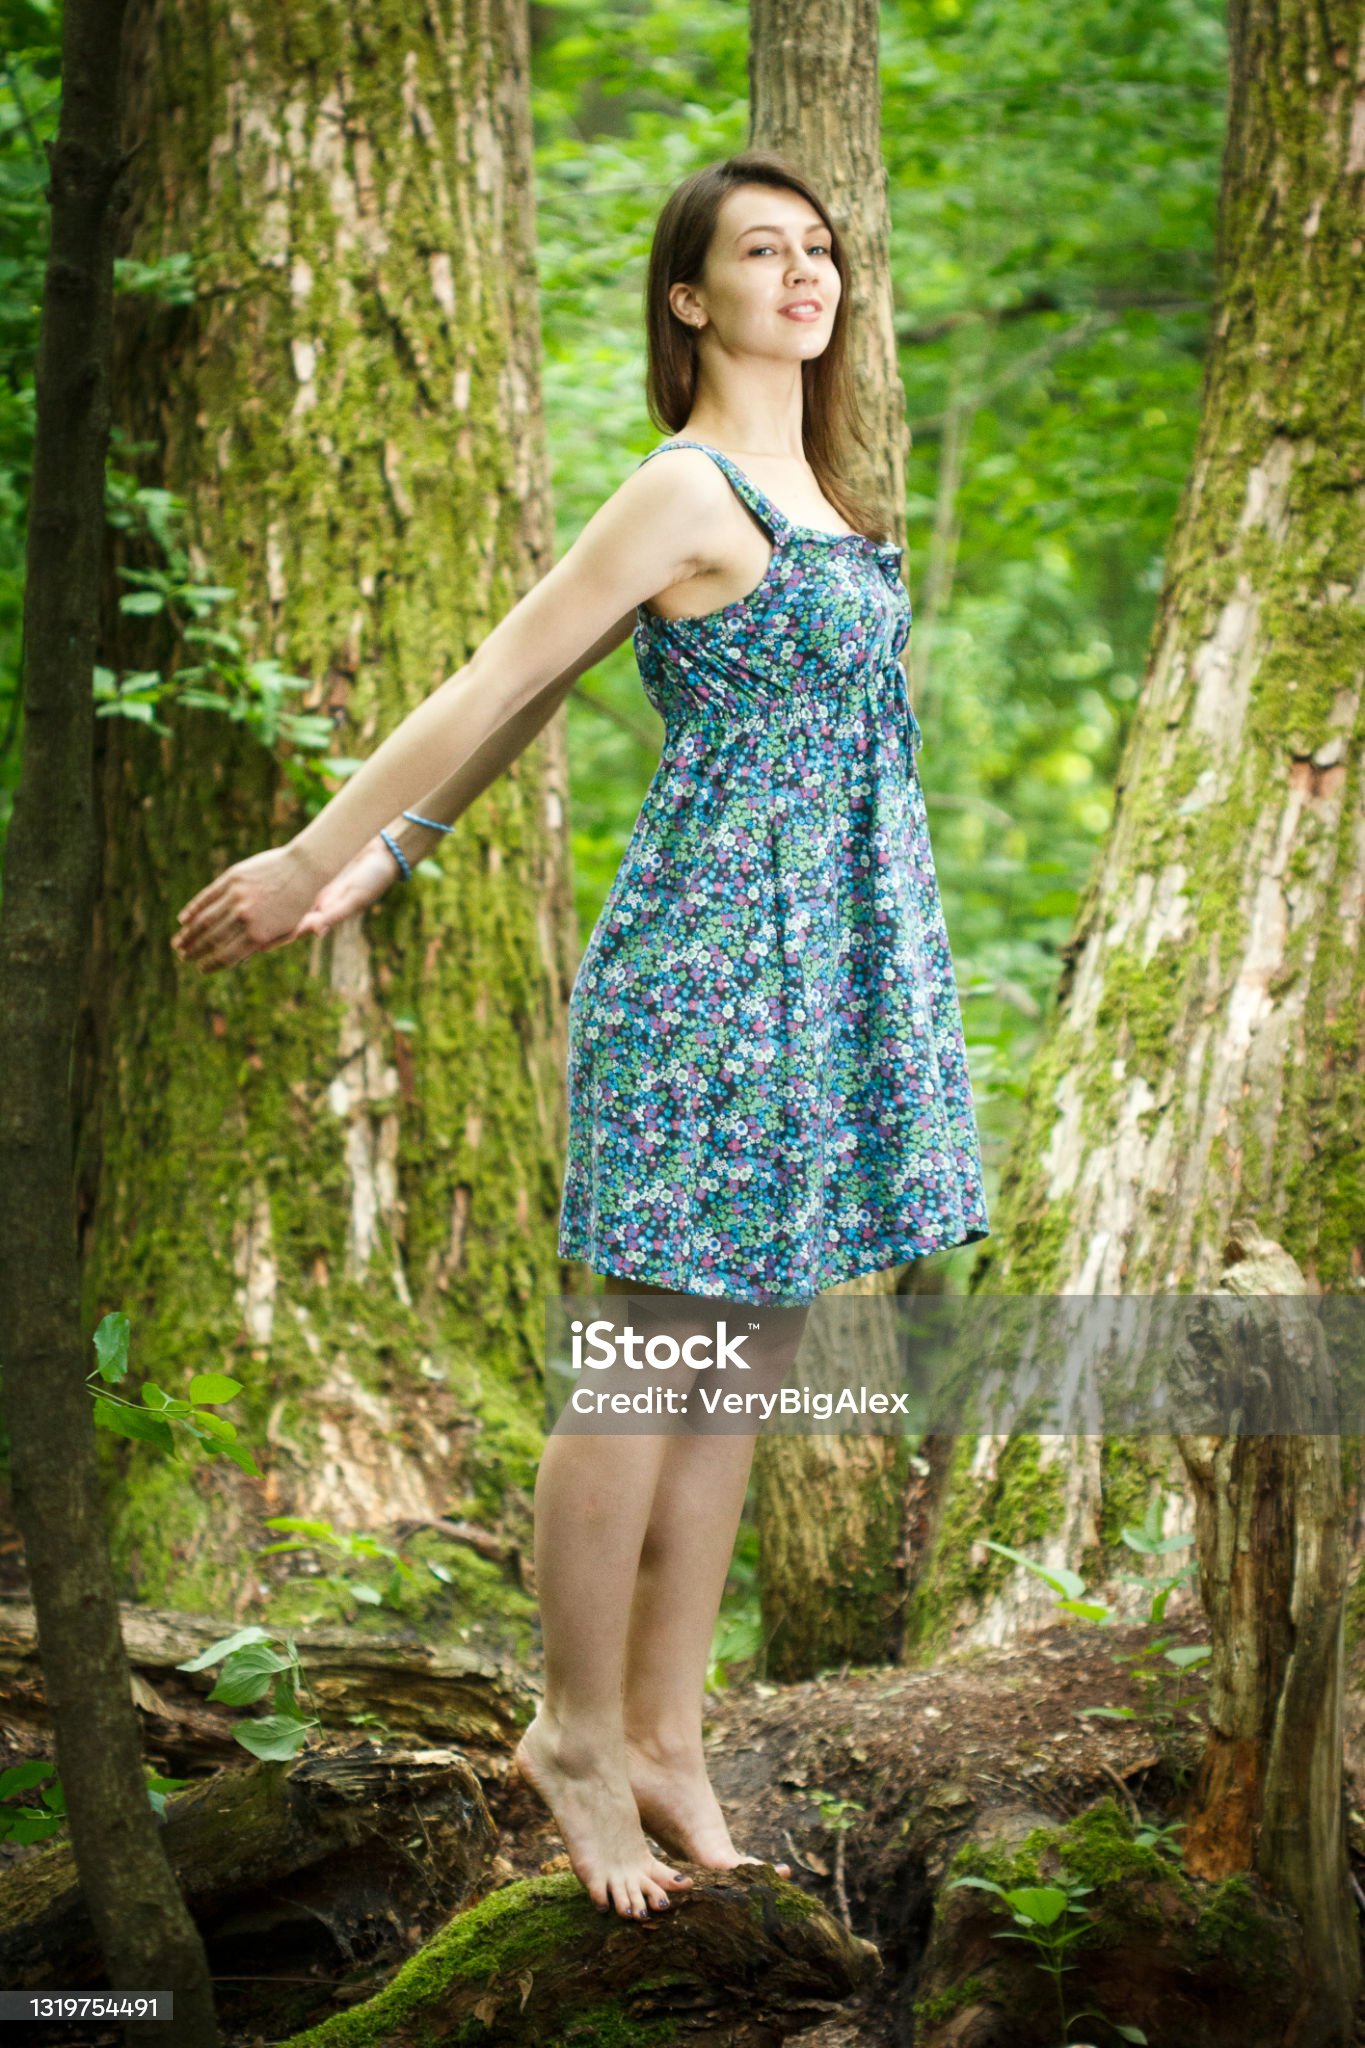 https://media.istockphoto.com/id/1319754491/photo/beautiful-young-woman-wearing-elegant-white-dress-walking-on-a-forest-path-with-rays-of.jpg?s=2048x2048&amp;w=is&amp;k=20&amp;c=PeejDr64_f9043W1iUJrSBGtG0lFXXCJvrh_tLX_MWA=